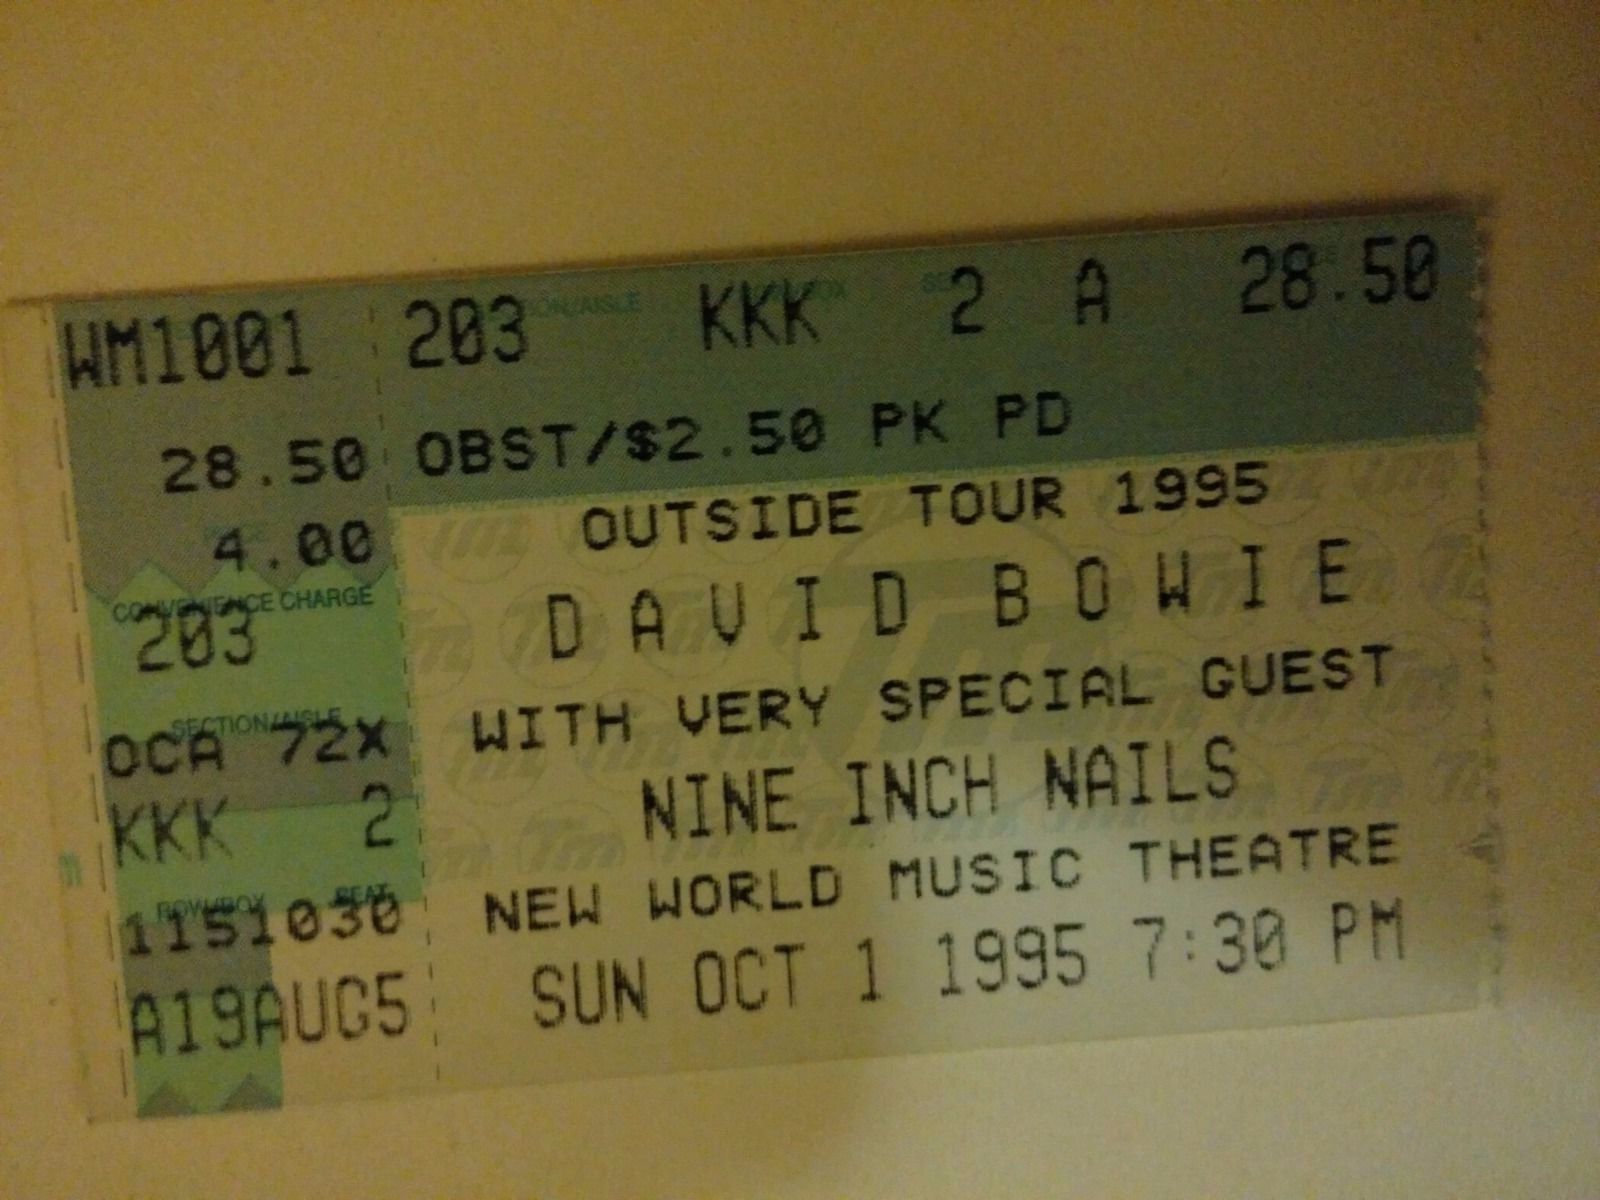 1995/10/01 Ticket